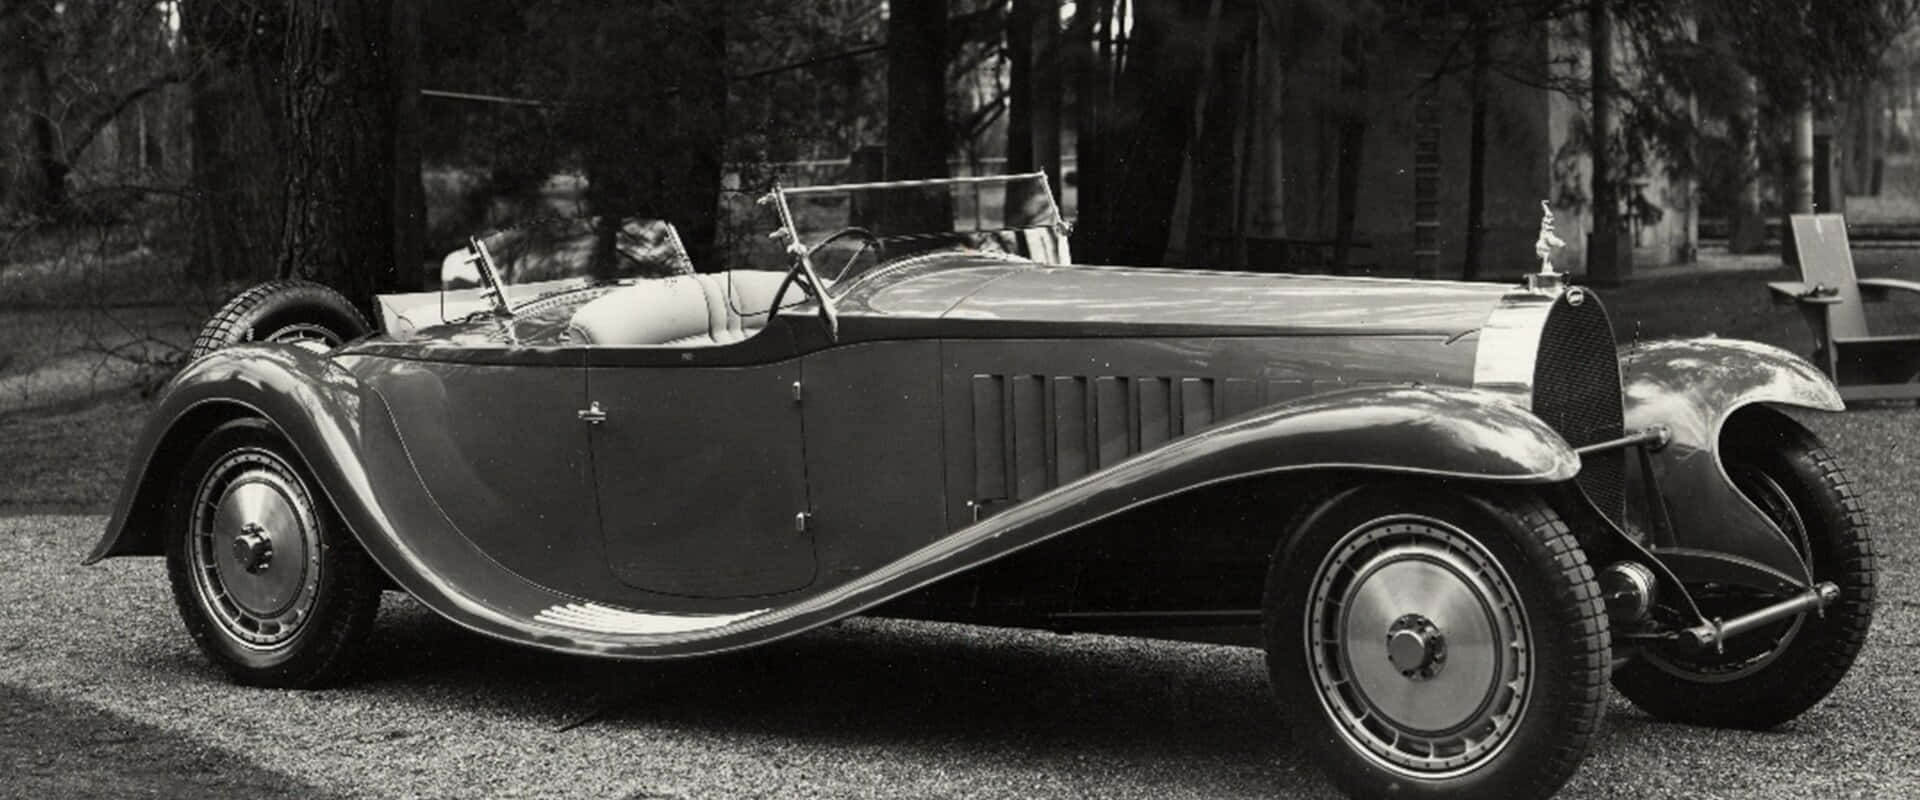 Majestic Bugatti Type 41 Royale On Display Wallpaper